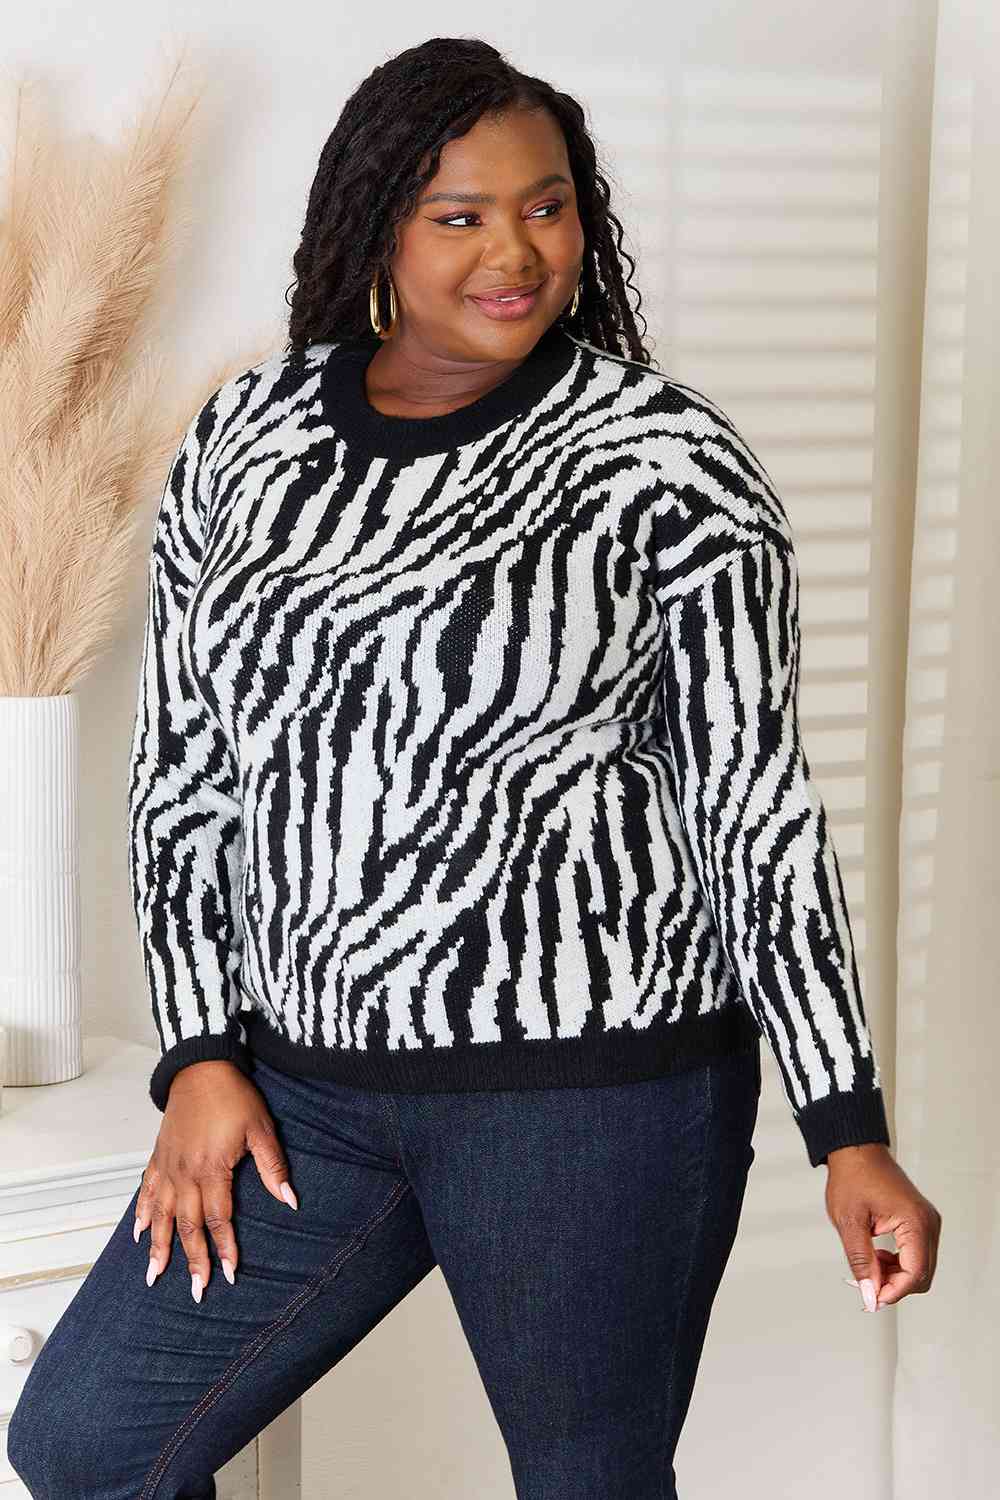 Black/White Zebra Print Pullover Sweater - Tigbuls Variety Fashion